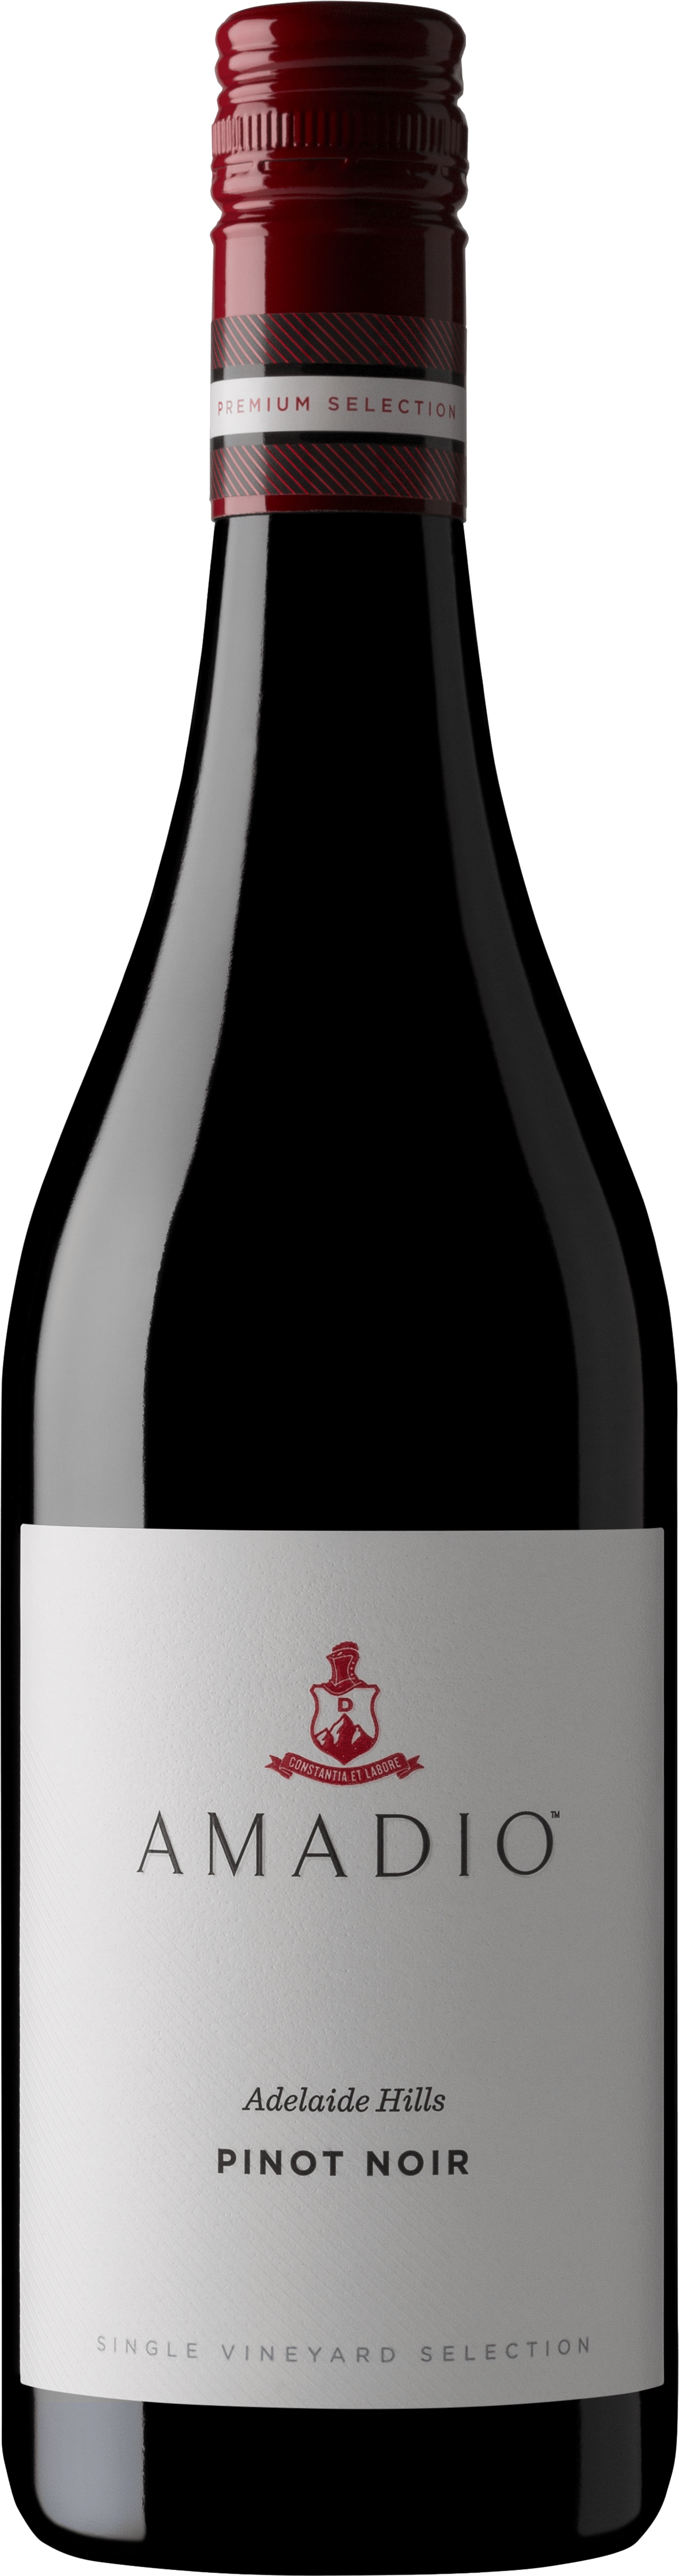 Amadio 2017 Adelaide Hills Pinot Noir